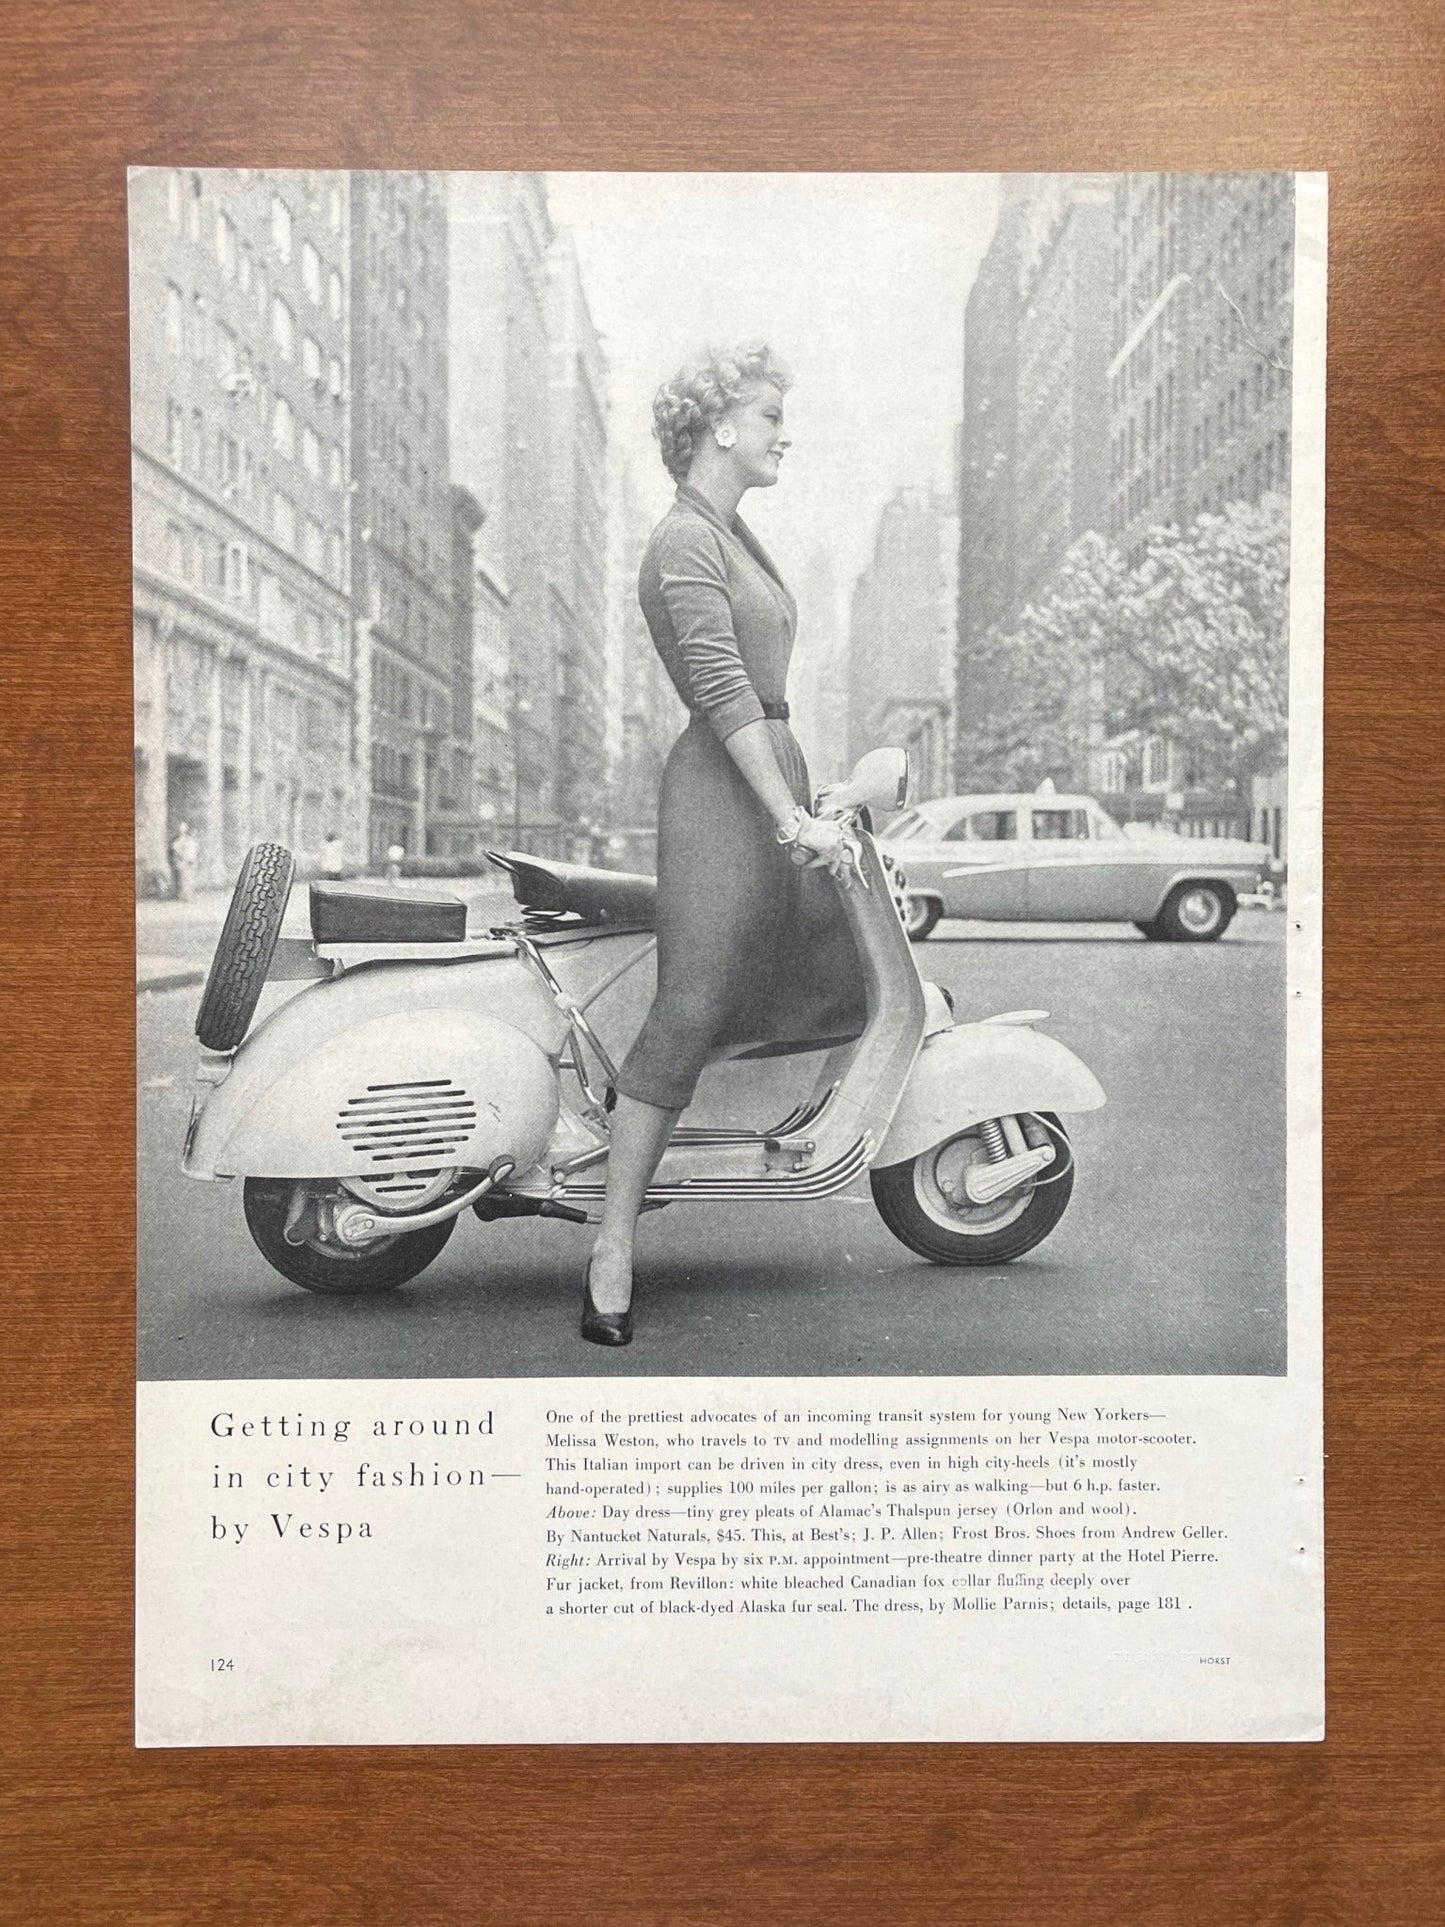 1956 Vespa Image in New York City Advertisement